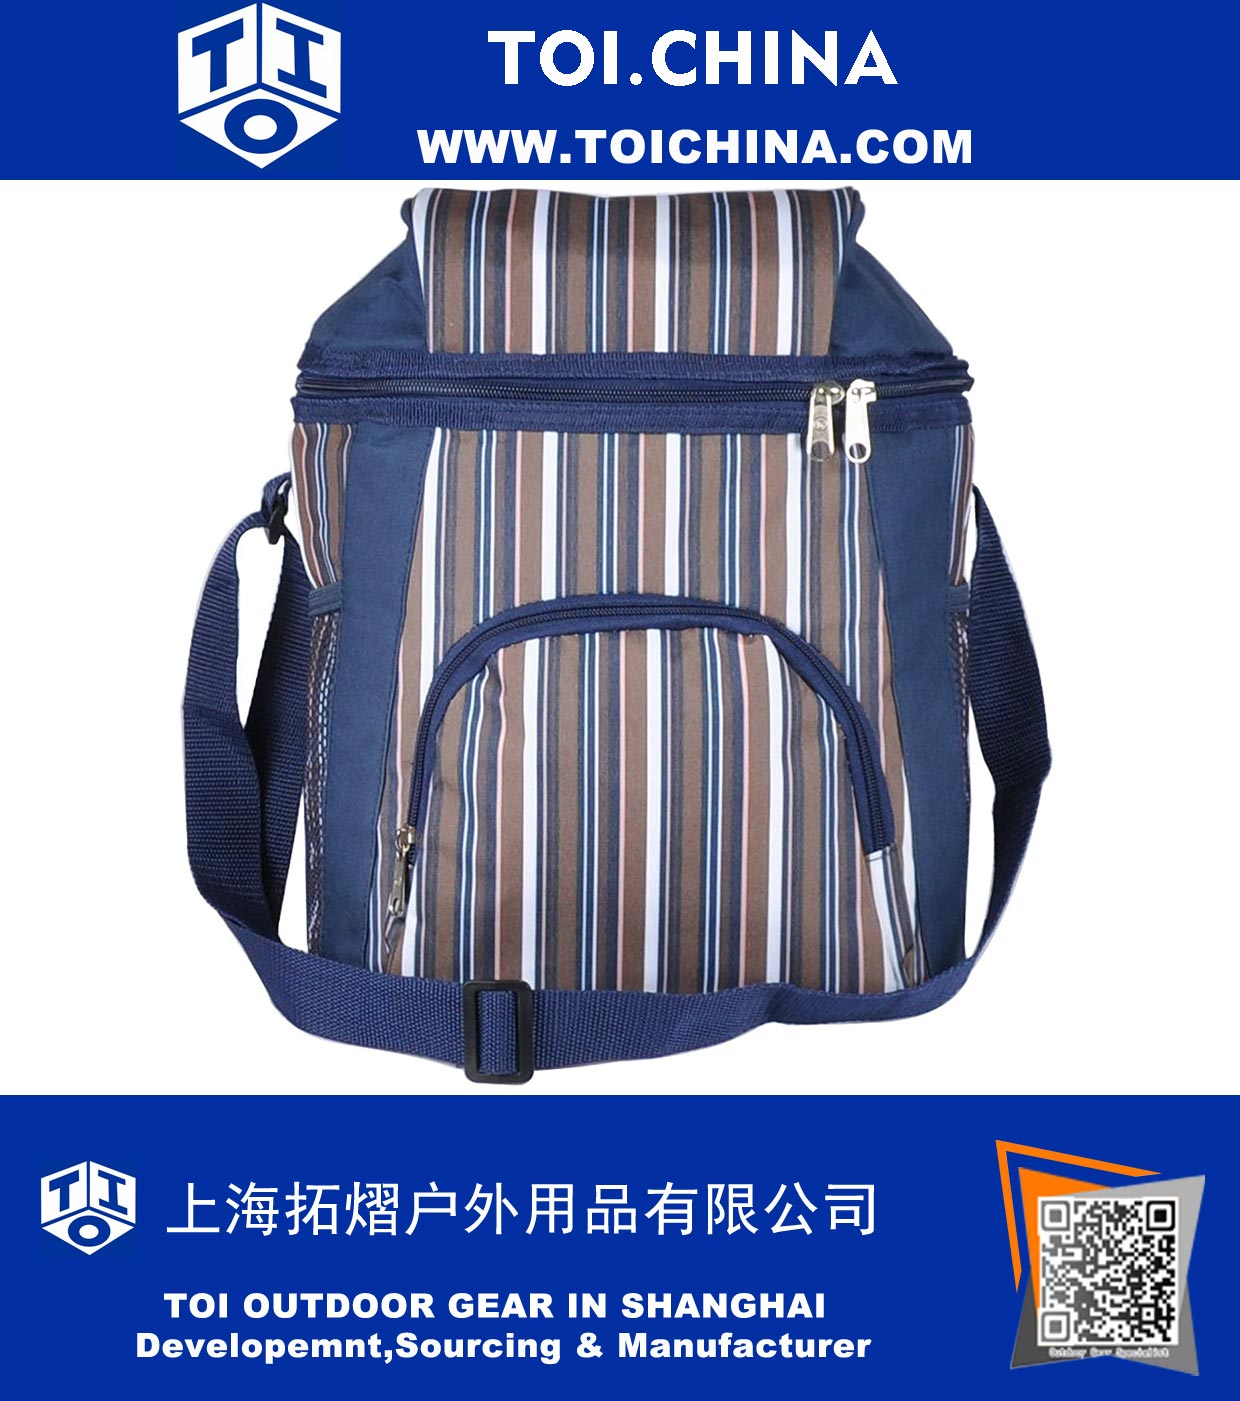 16 Can Picnic Lunch Bag Cooler Bag